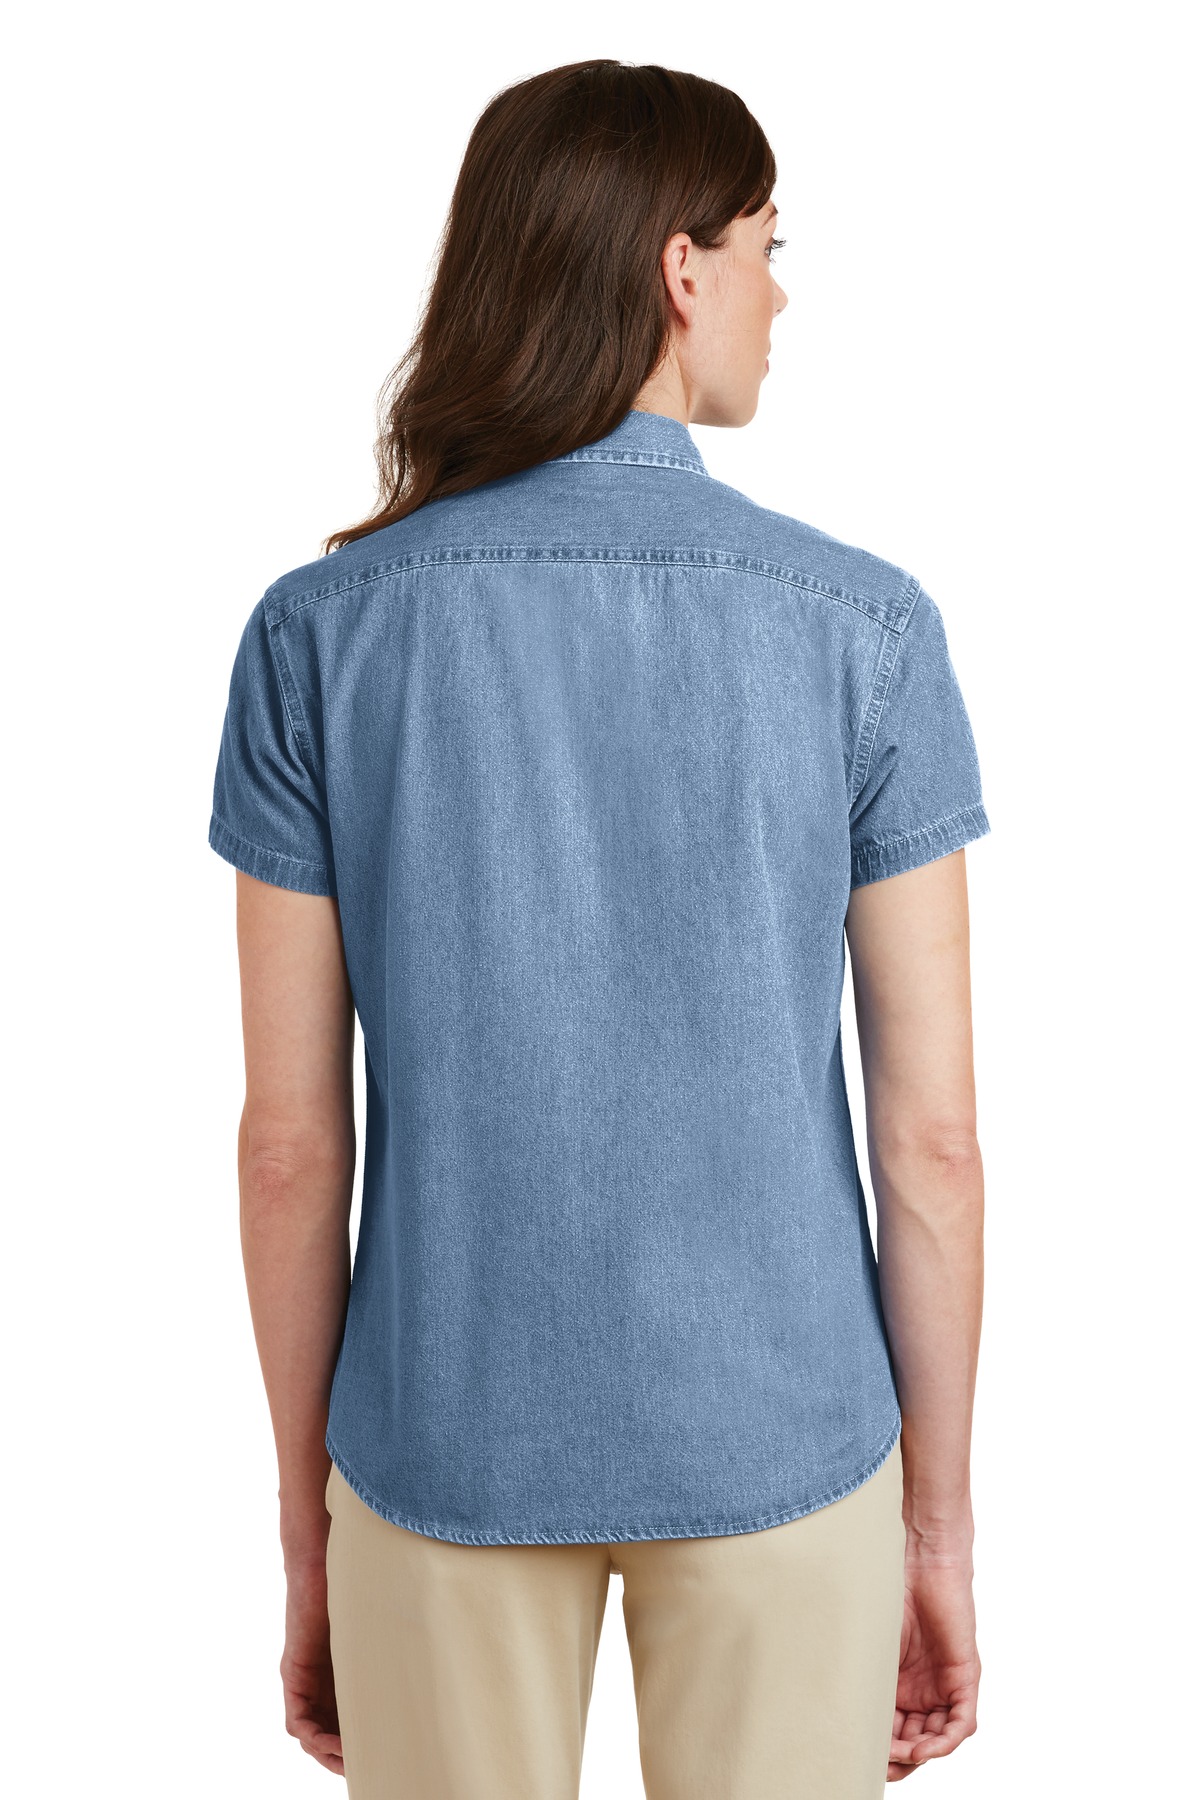 Port & Company Short Sleeve Value Denim Shirt (LSP11) Faded Blue, L - image 2 of 2